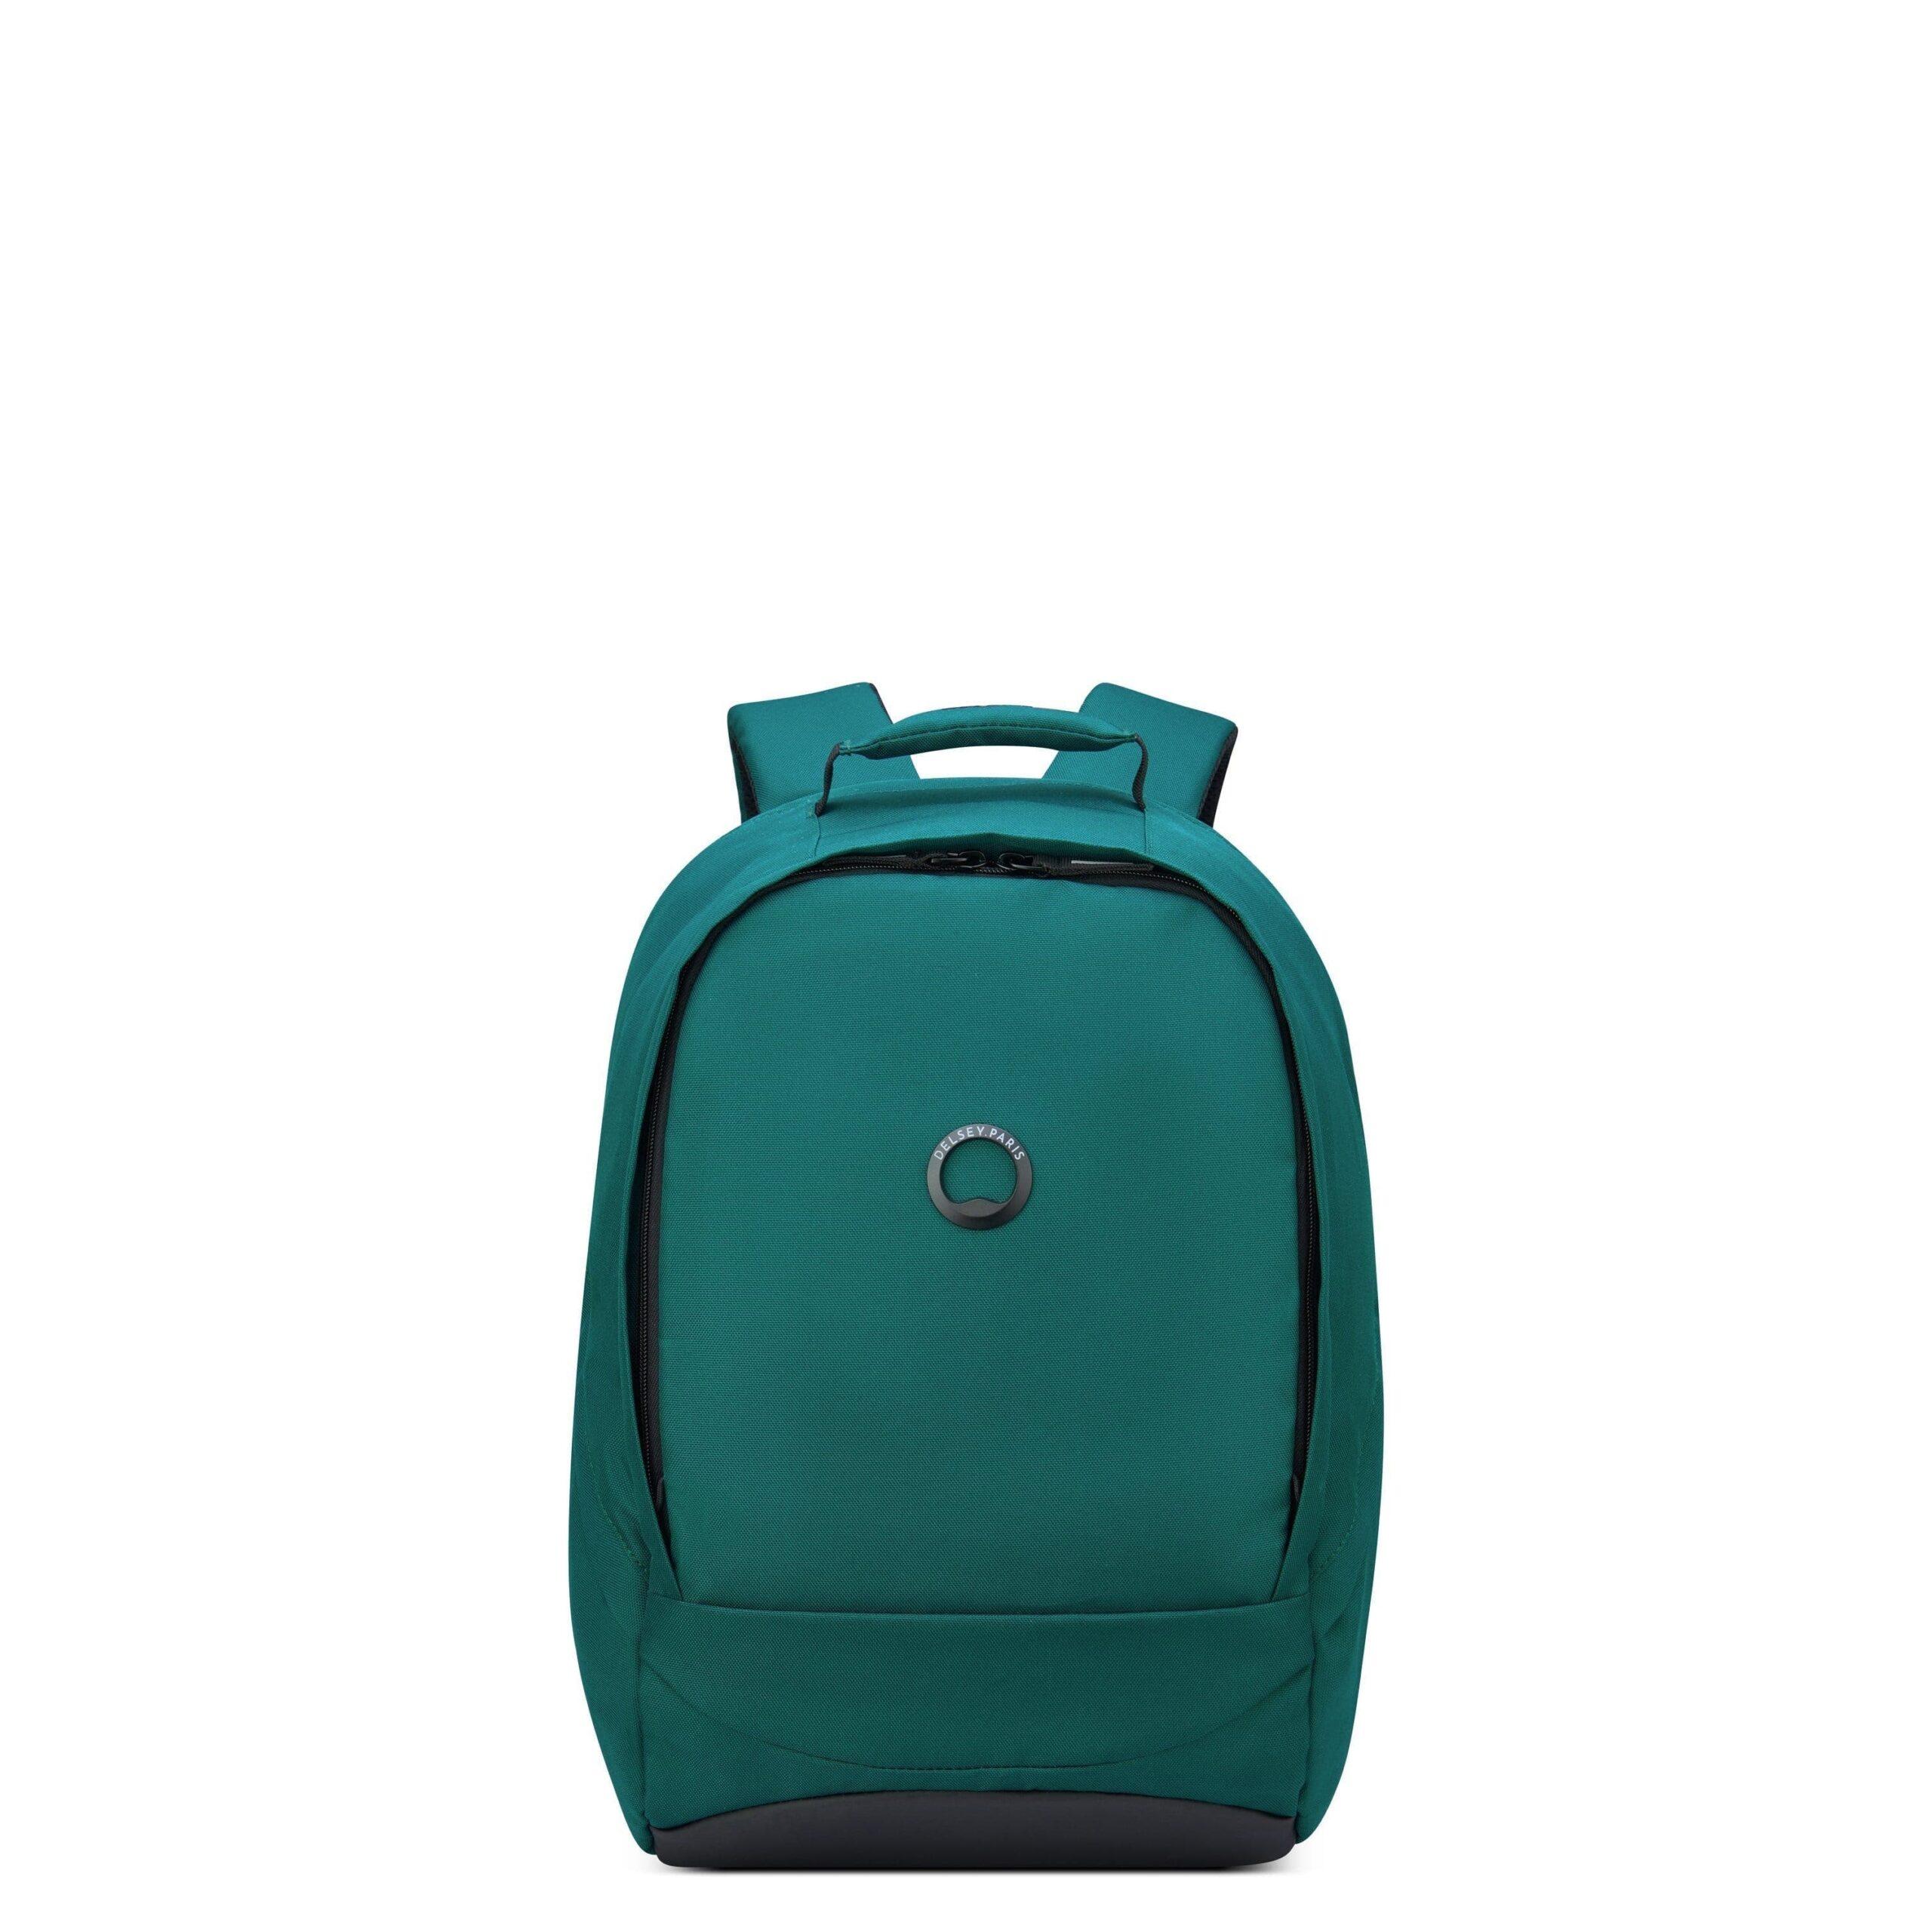 شنط ظهر سيكيور بان للابتوب 13.3 بوصة 22 لتر بوليستر لون أخضر من ديلسي Delsey Securban 13.3" Laptop Protection Backpack